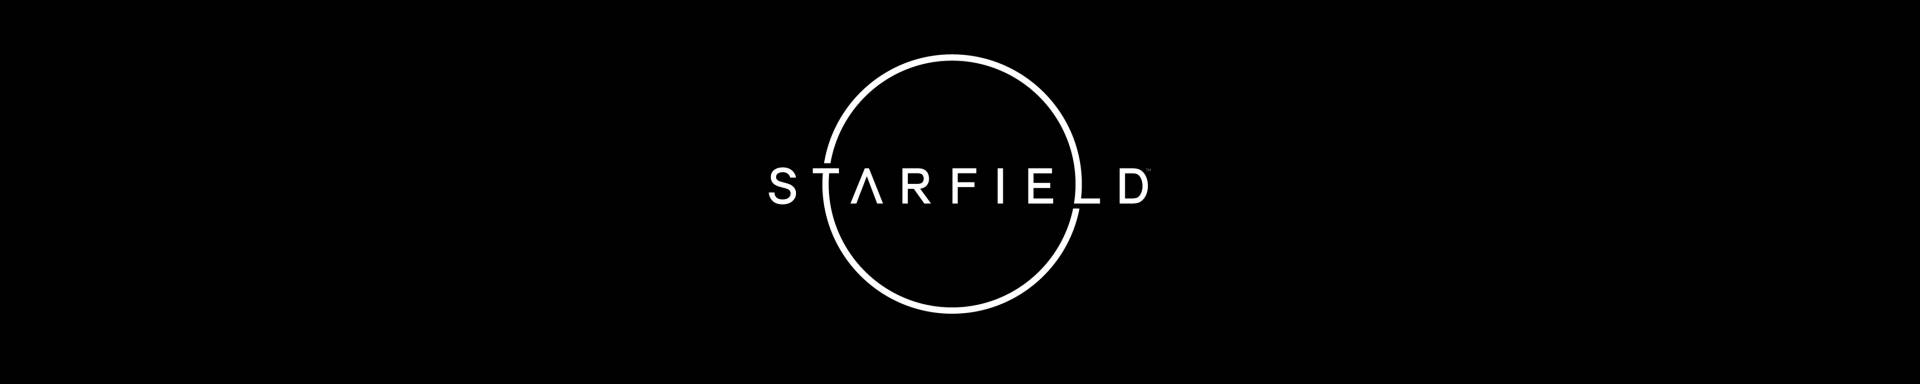 Starfield character design contest slice